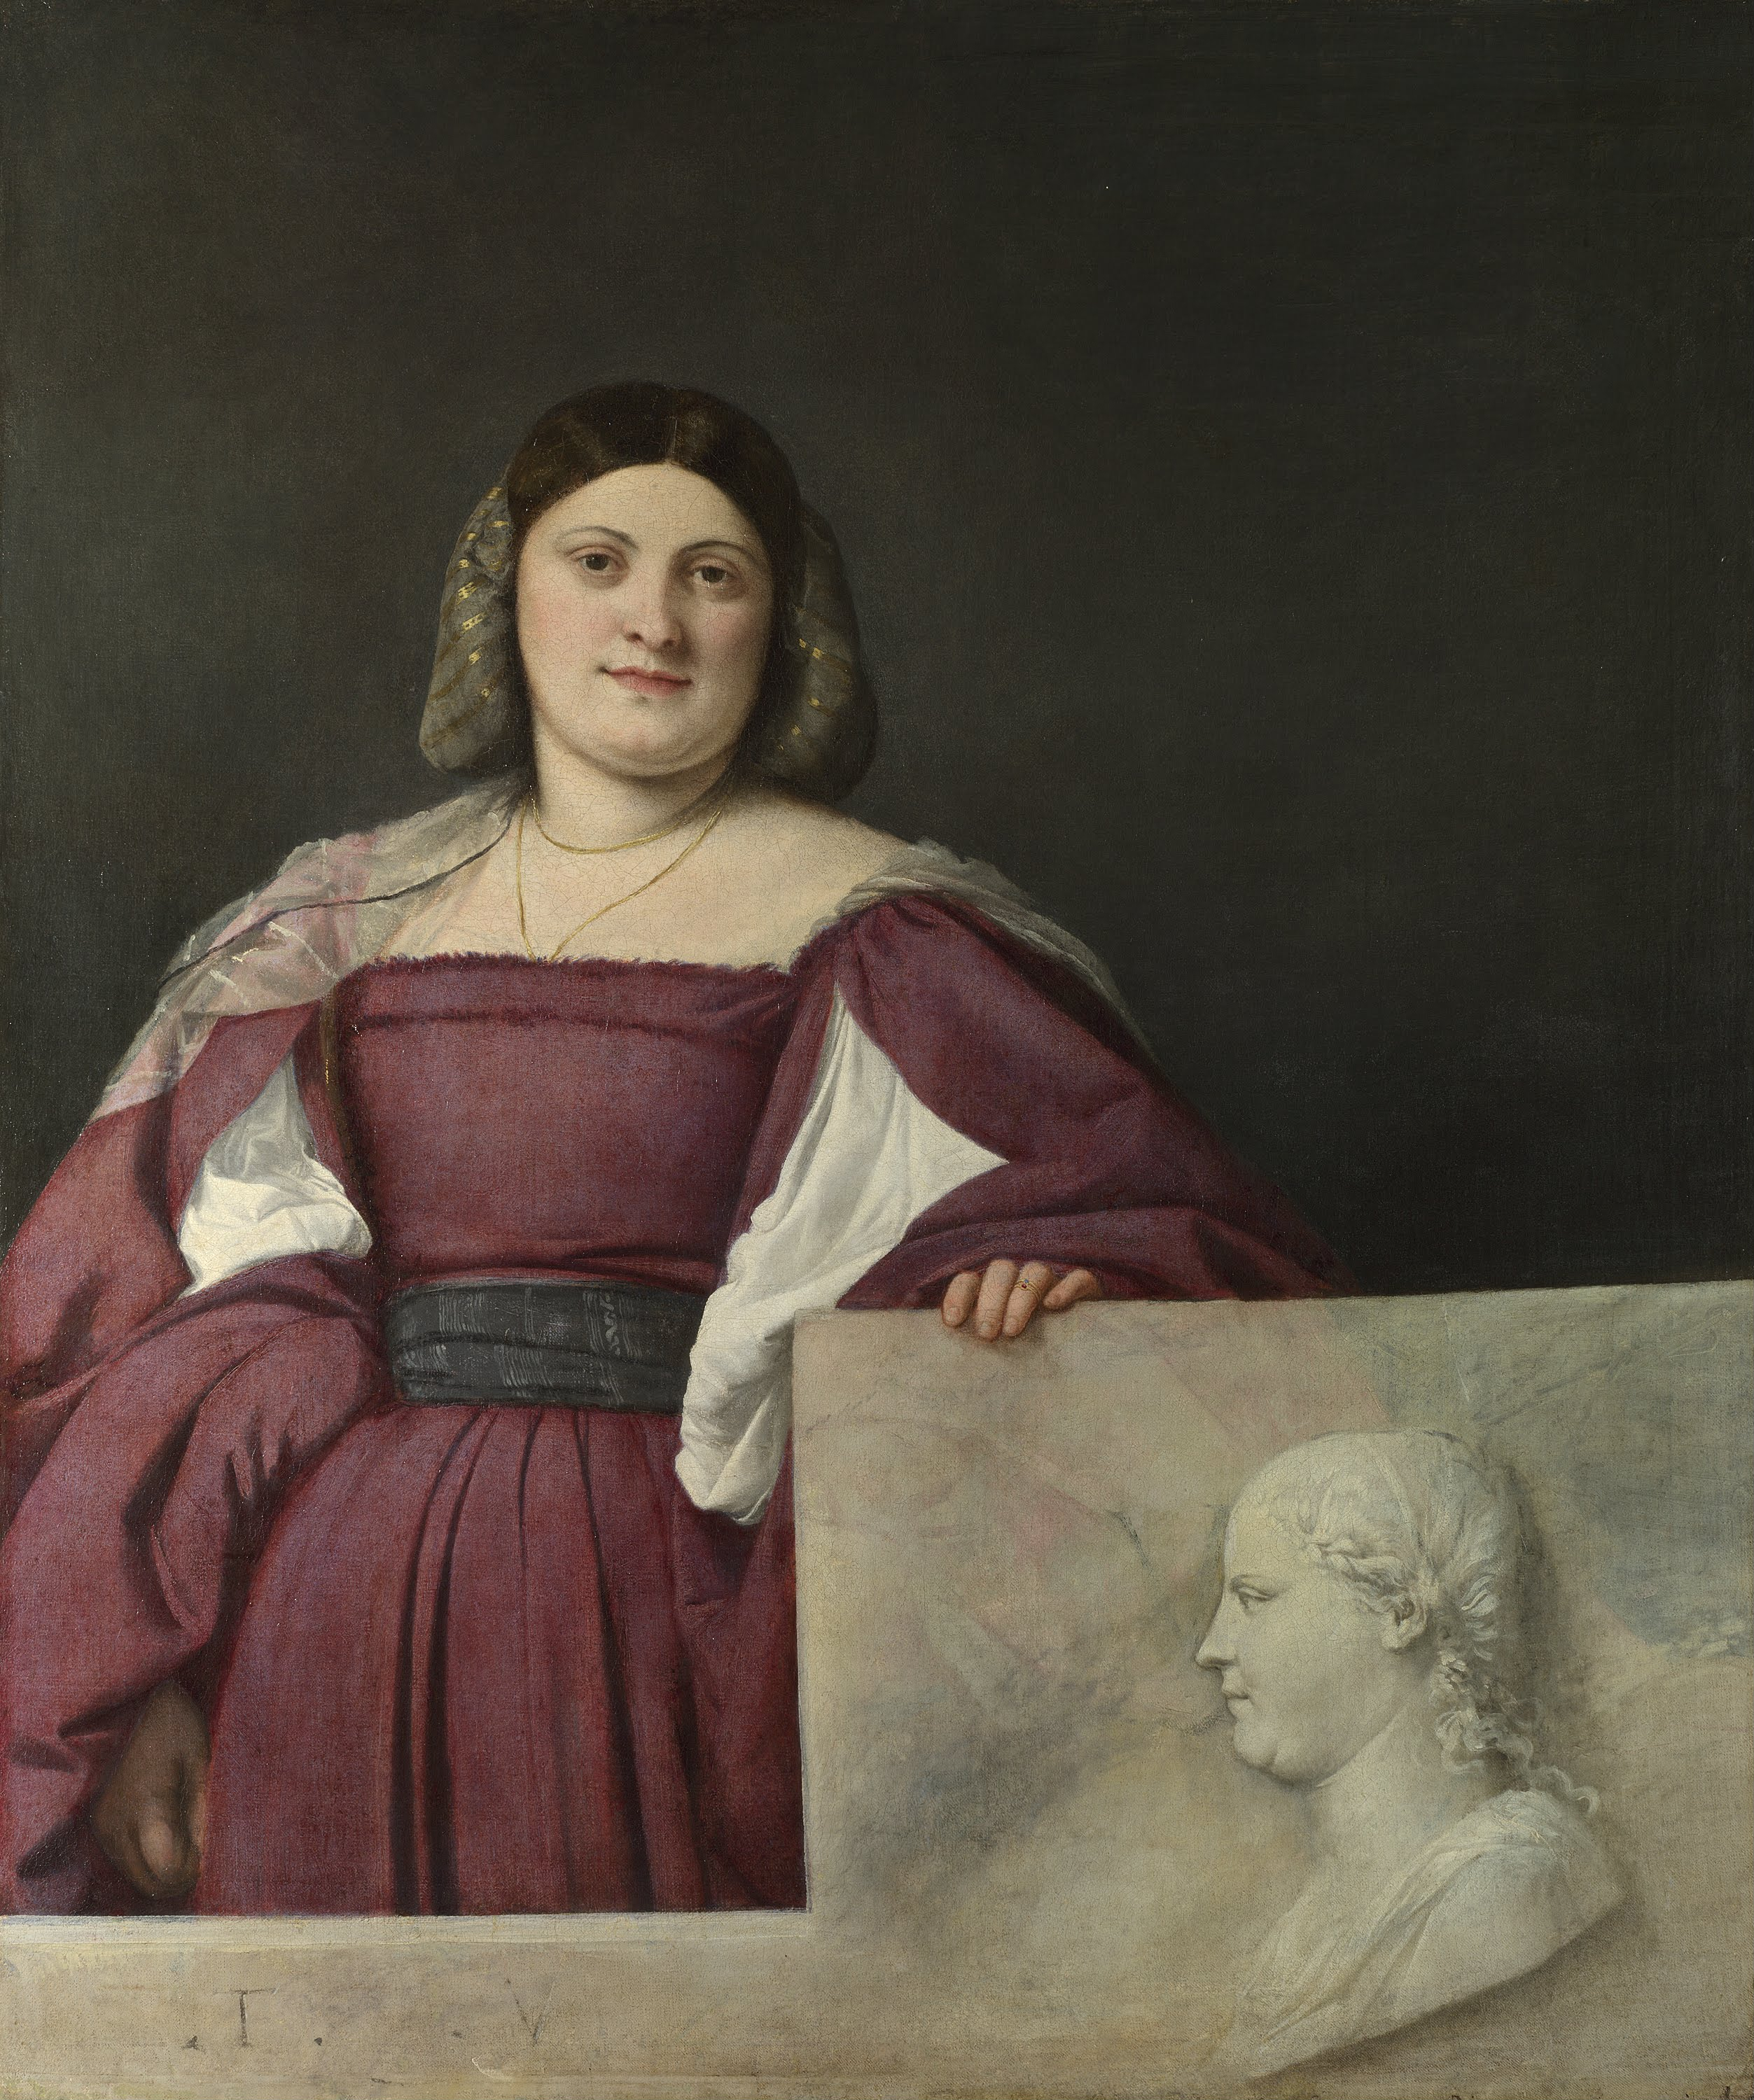 Portrait of a Lady ('La Schiavona') by  Titian - about 1510-12 - 119.4 x 96.5 cm National Gallery